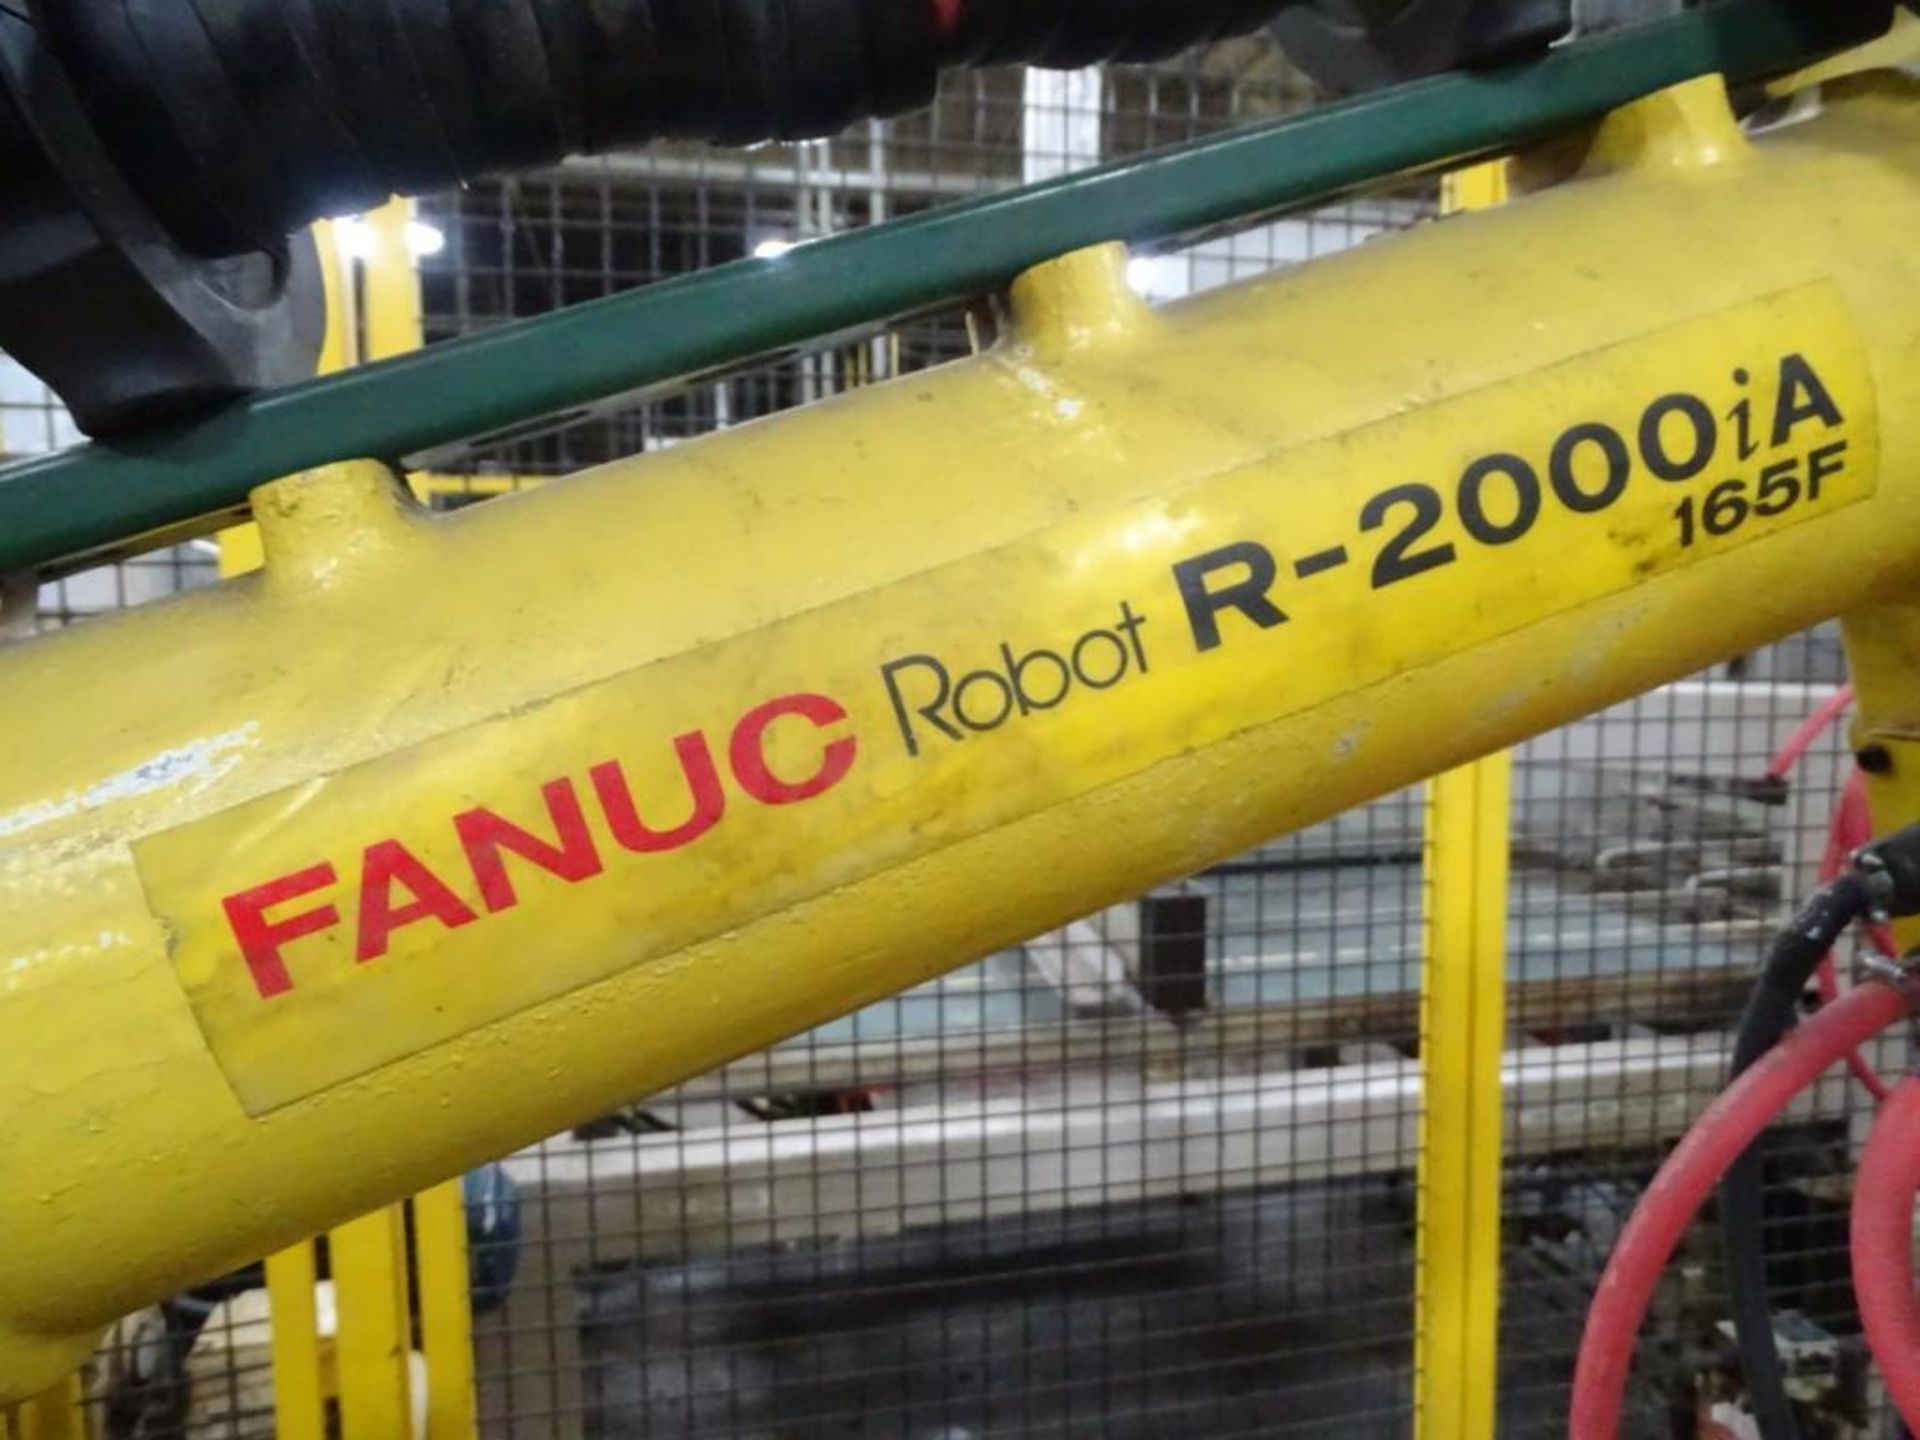 Fanuc R-2000iA/165F Robotic Arm with Teach Pendant and Controls - Image 4 of 6